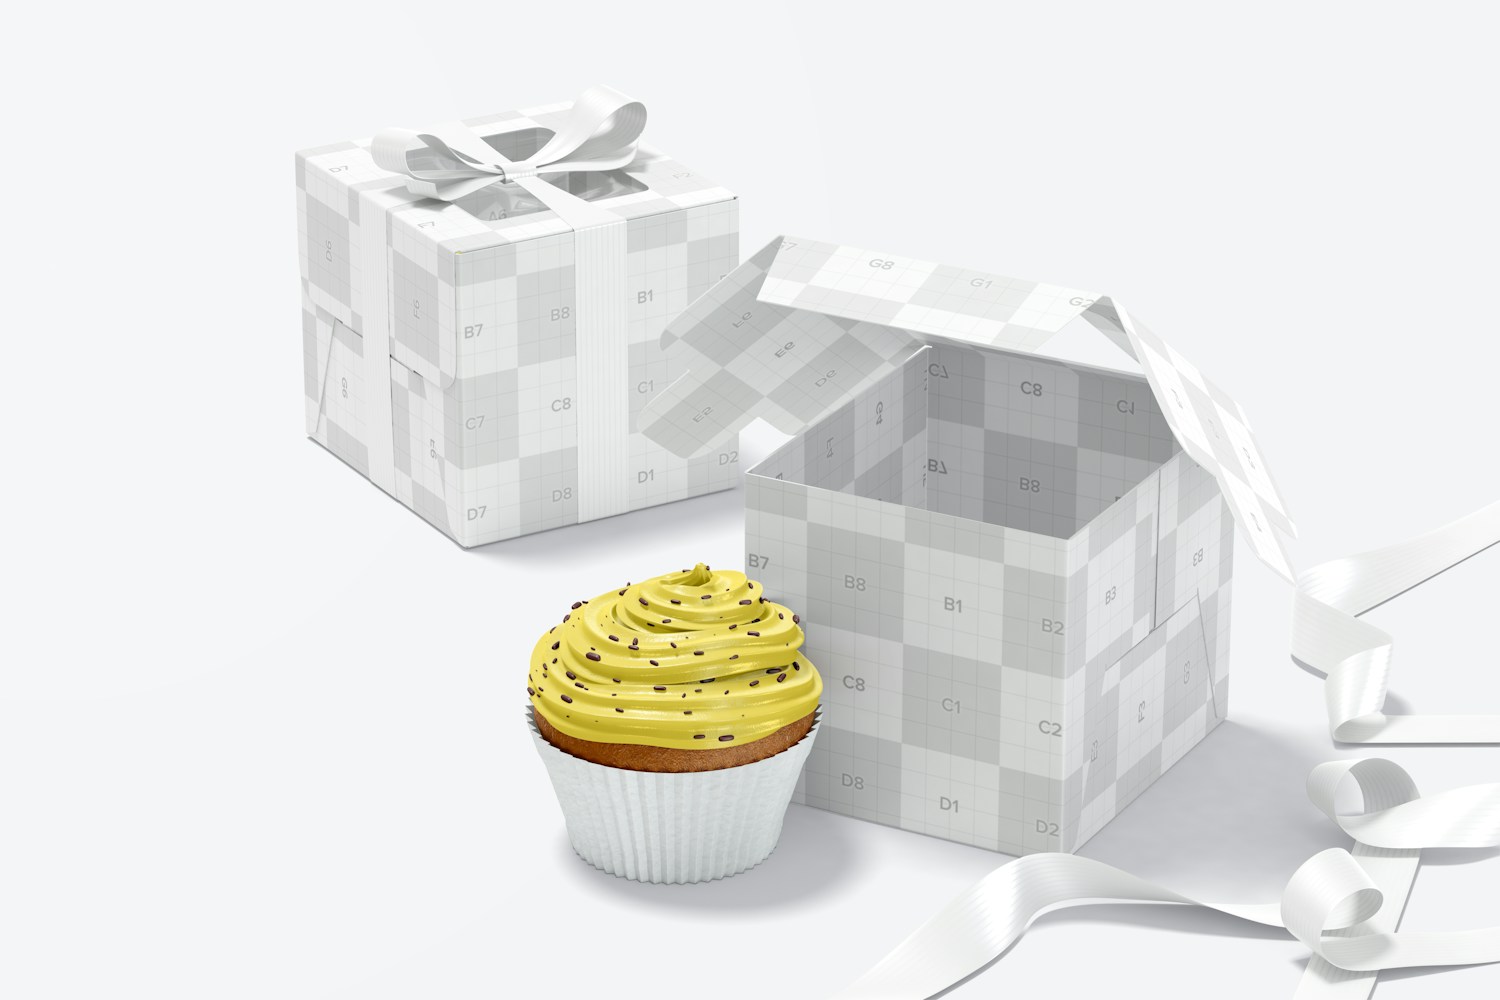 Fully customizable box and cupcake.